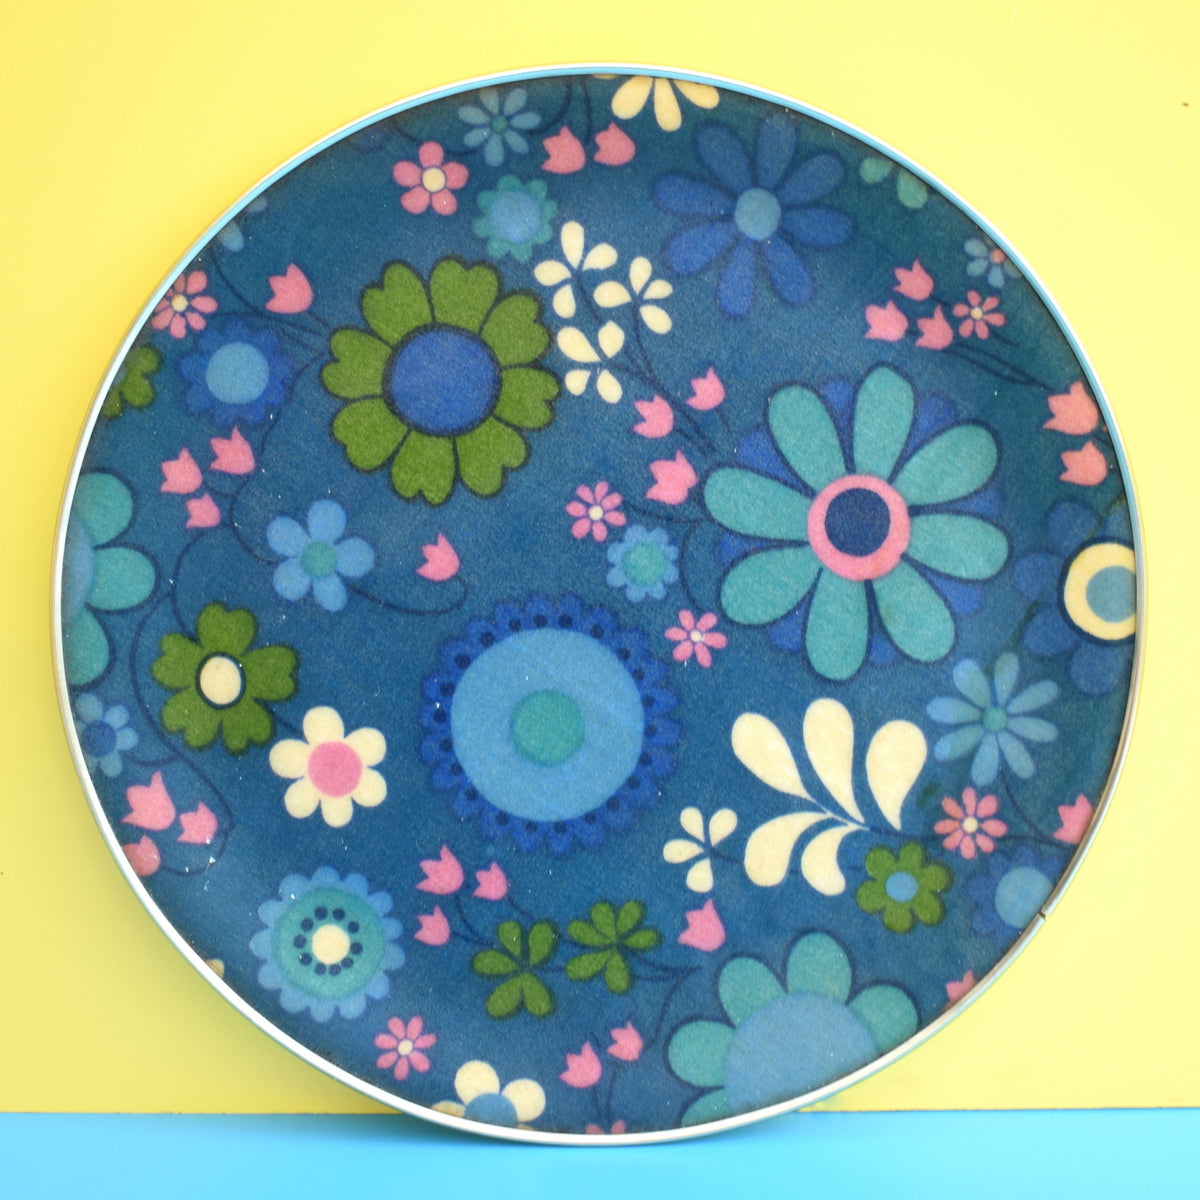 Vintage 1960s fibreglass Round Tray - Flower Power Design - Blue